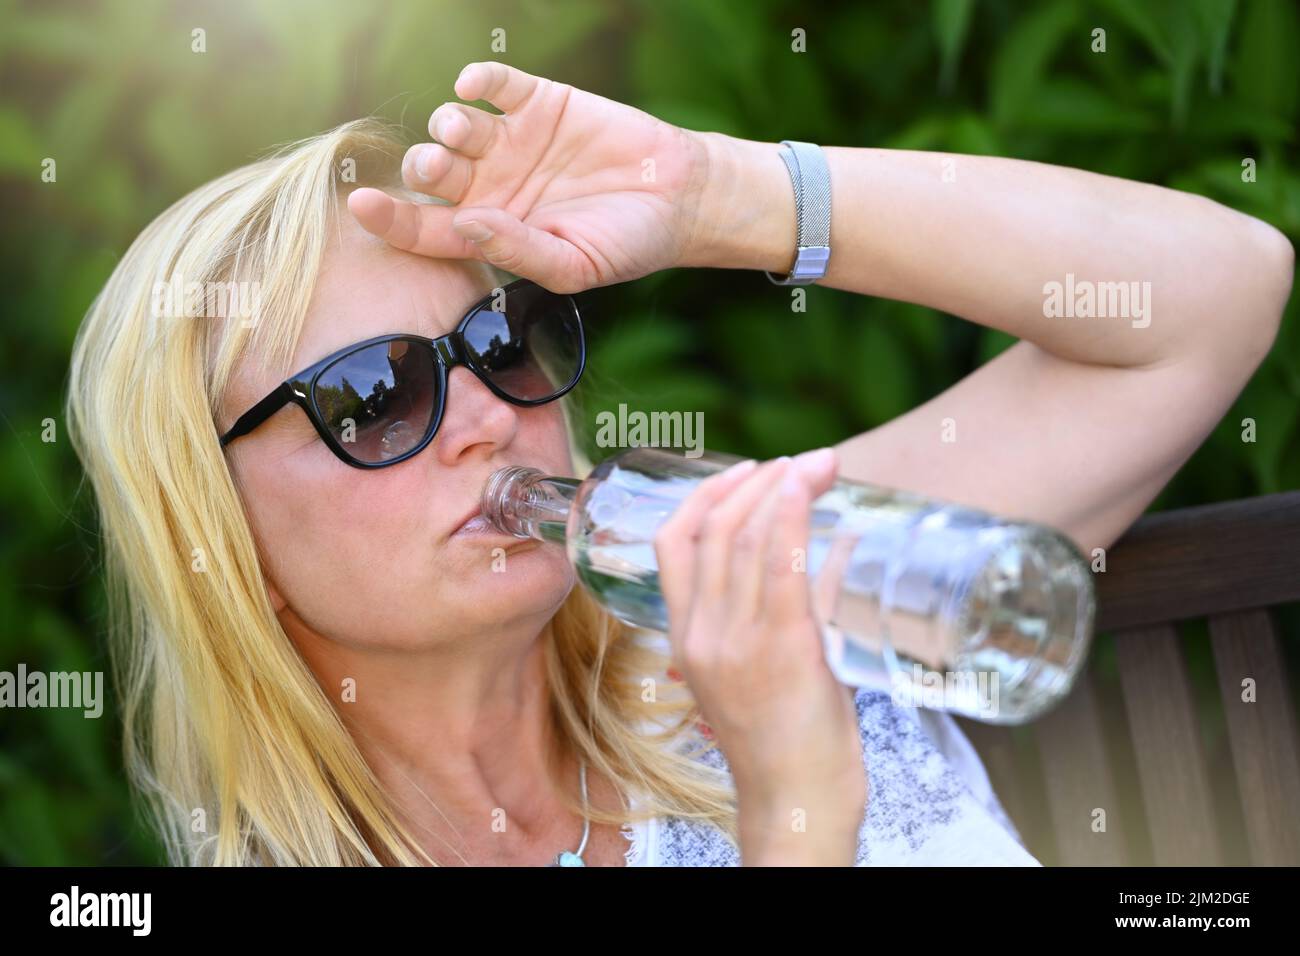 Woman Drinks Water In The Garden, Heat Wave Stock Photo